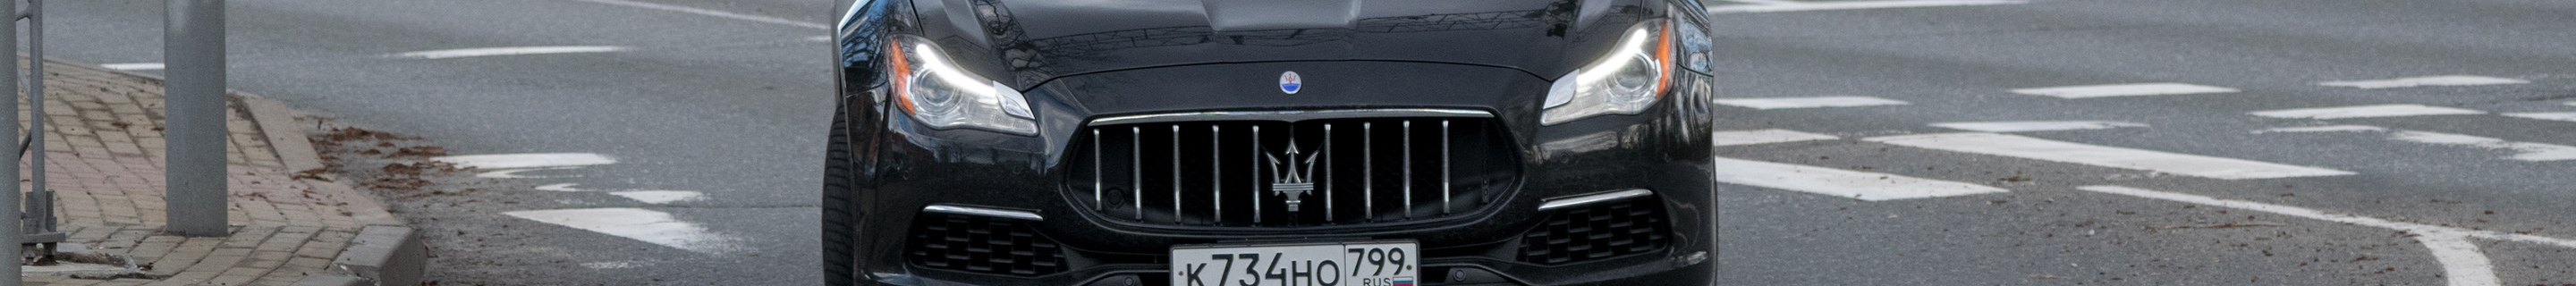 Maserati Quattroporte S Q4 2017